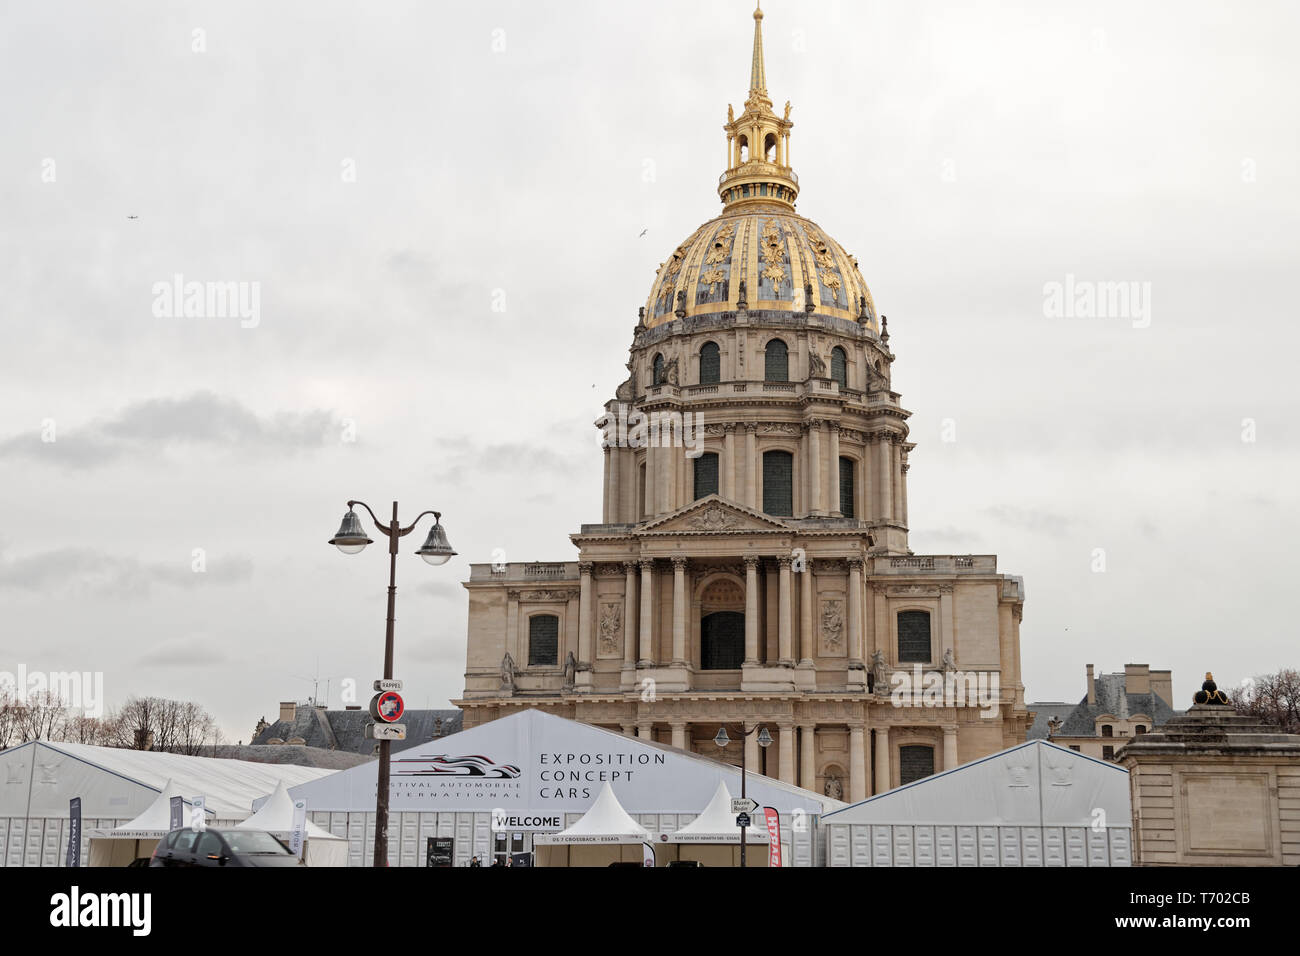 Paris,France 31st Jan,2019.The 34th International Automobile Festival at the National Hotel des Invalides.Credit:Veronique Phitoussi/Alamy Stock Photo Stock Photo